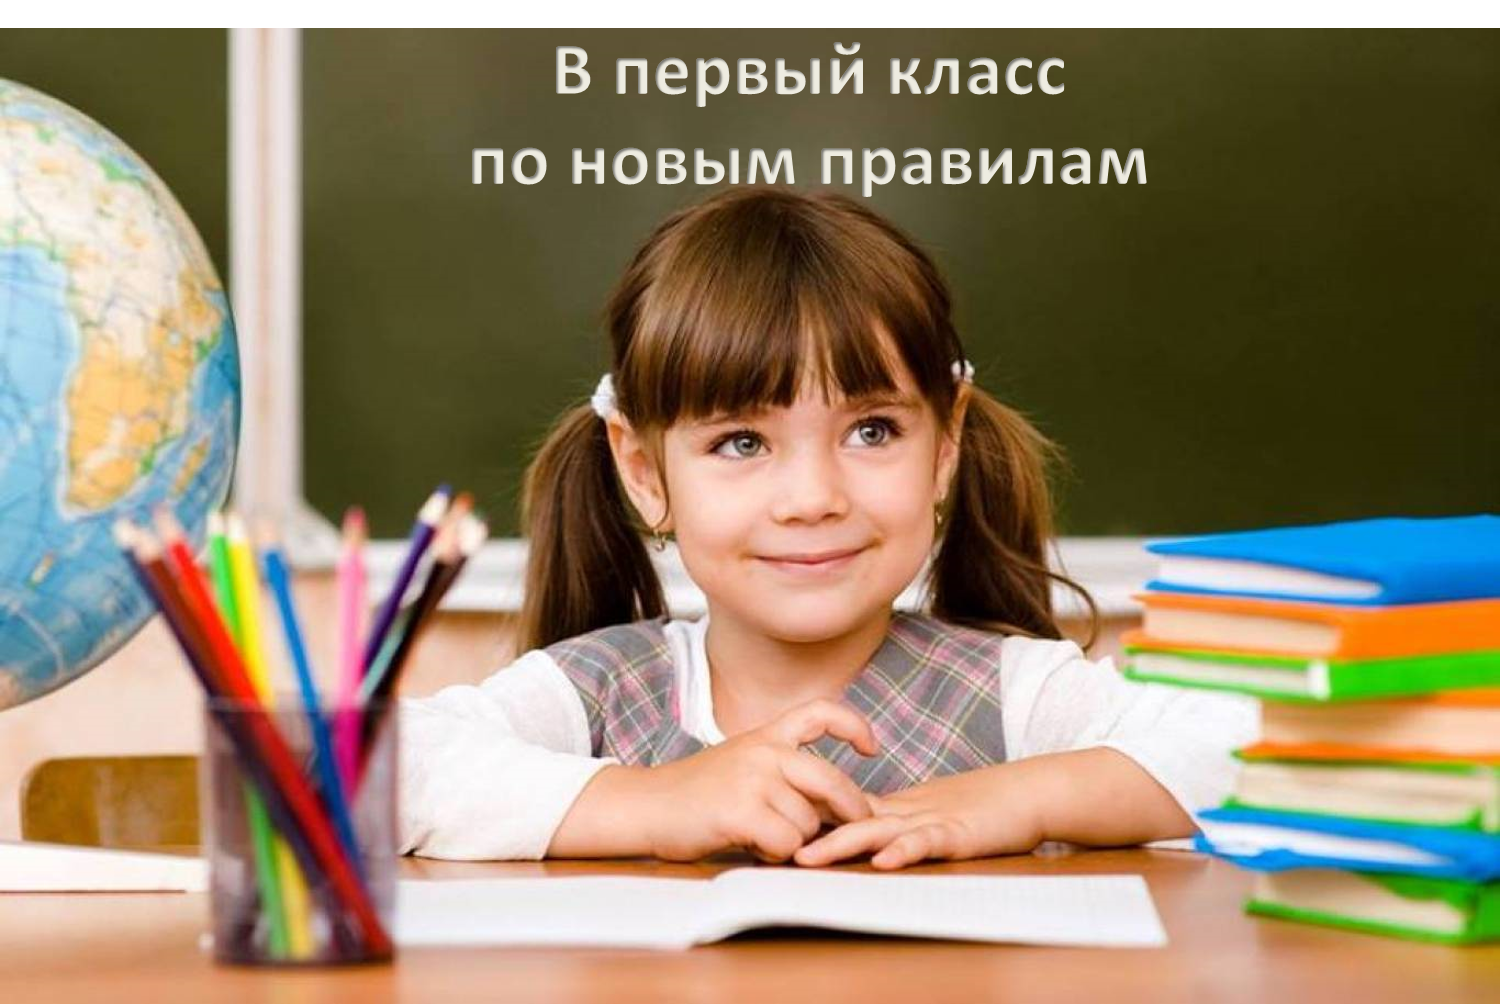 http://school2kovdor.ucoz.org/fono15/oprgepr.png